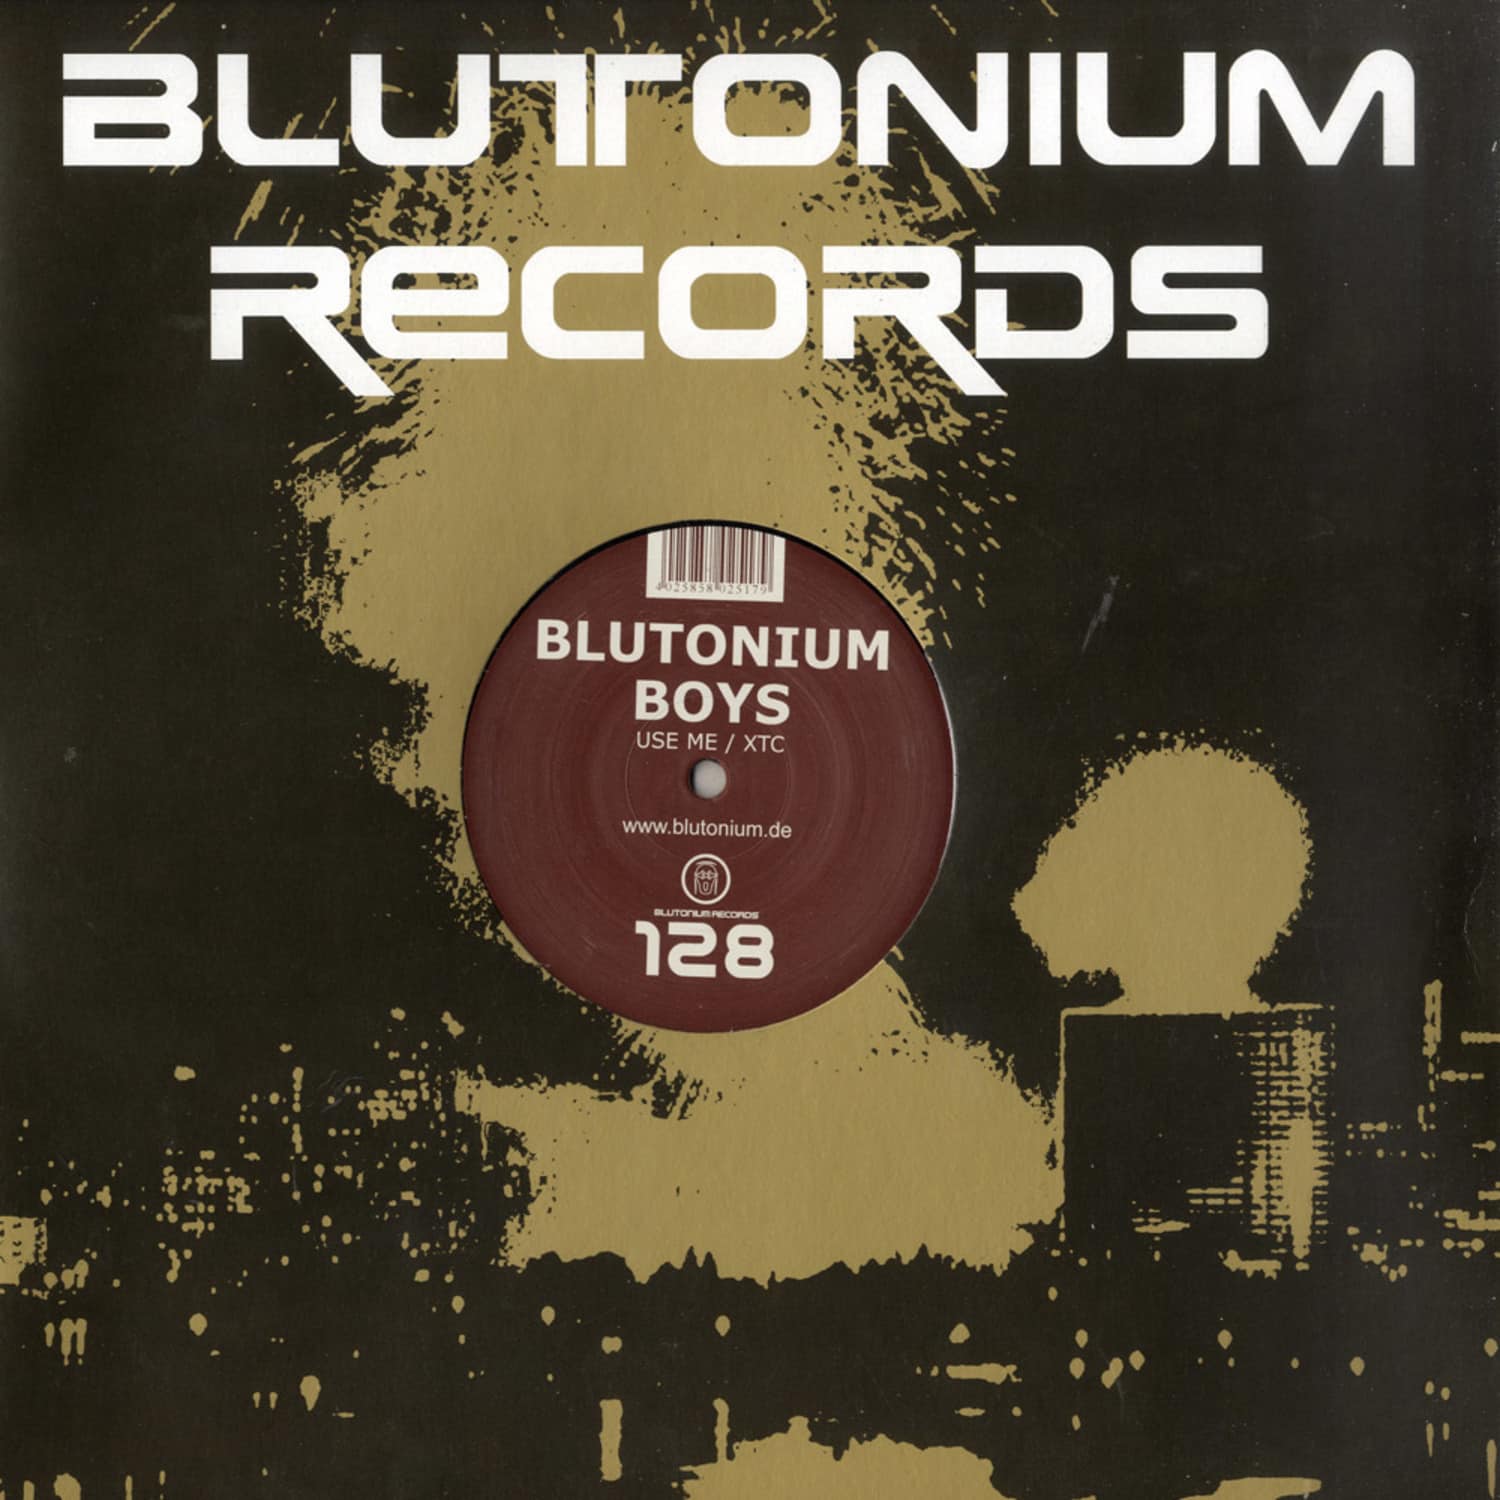 Blutonium Boys - USE ME / XTC